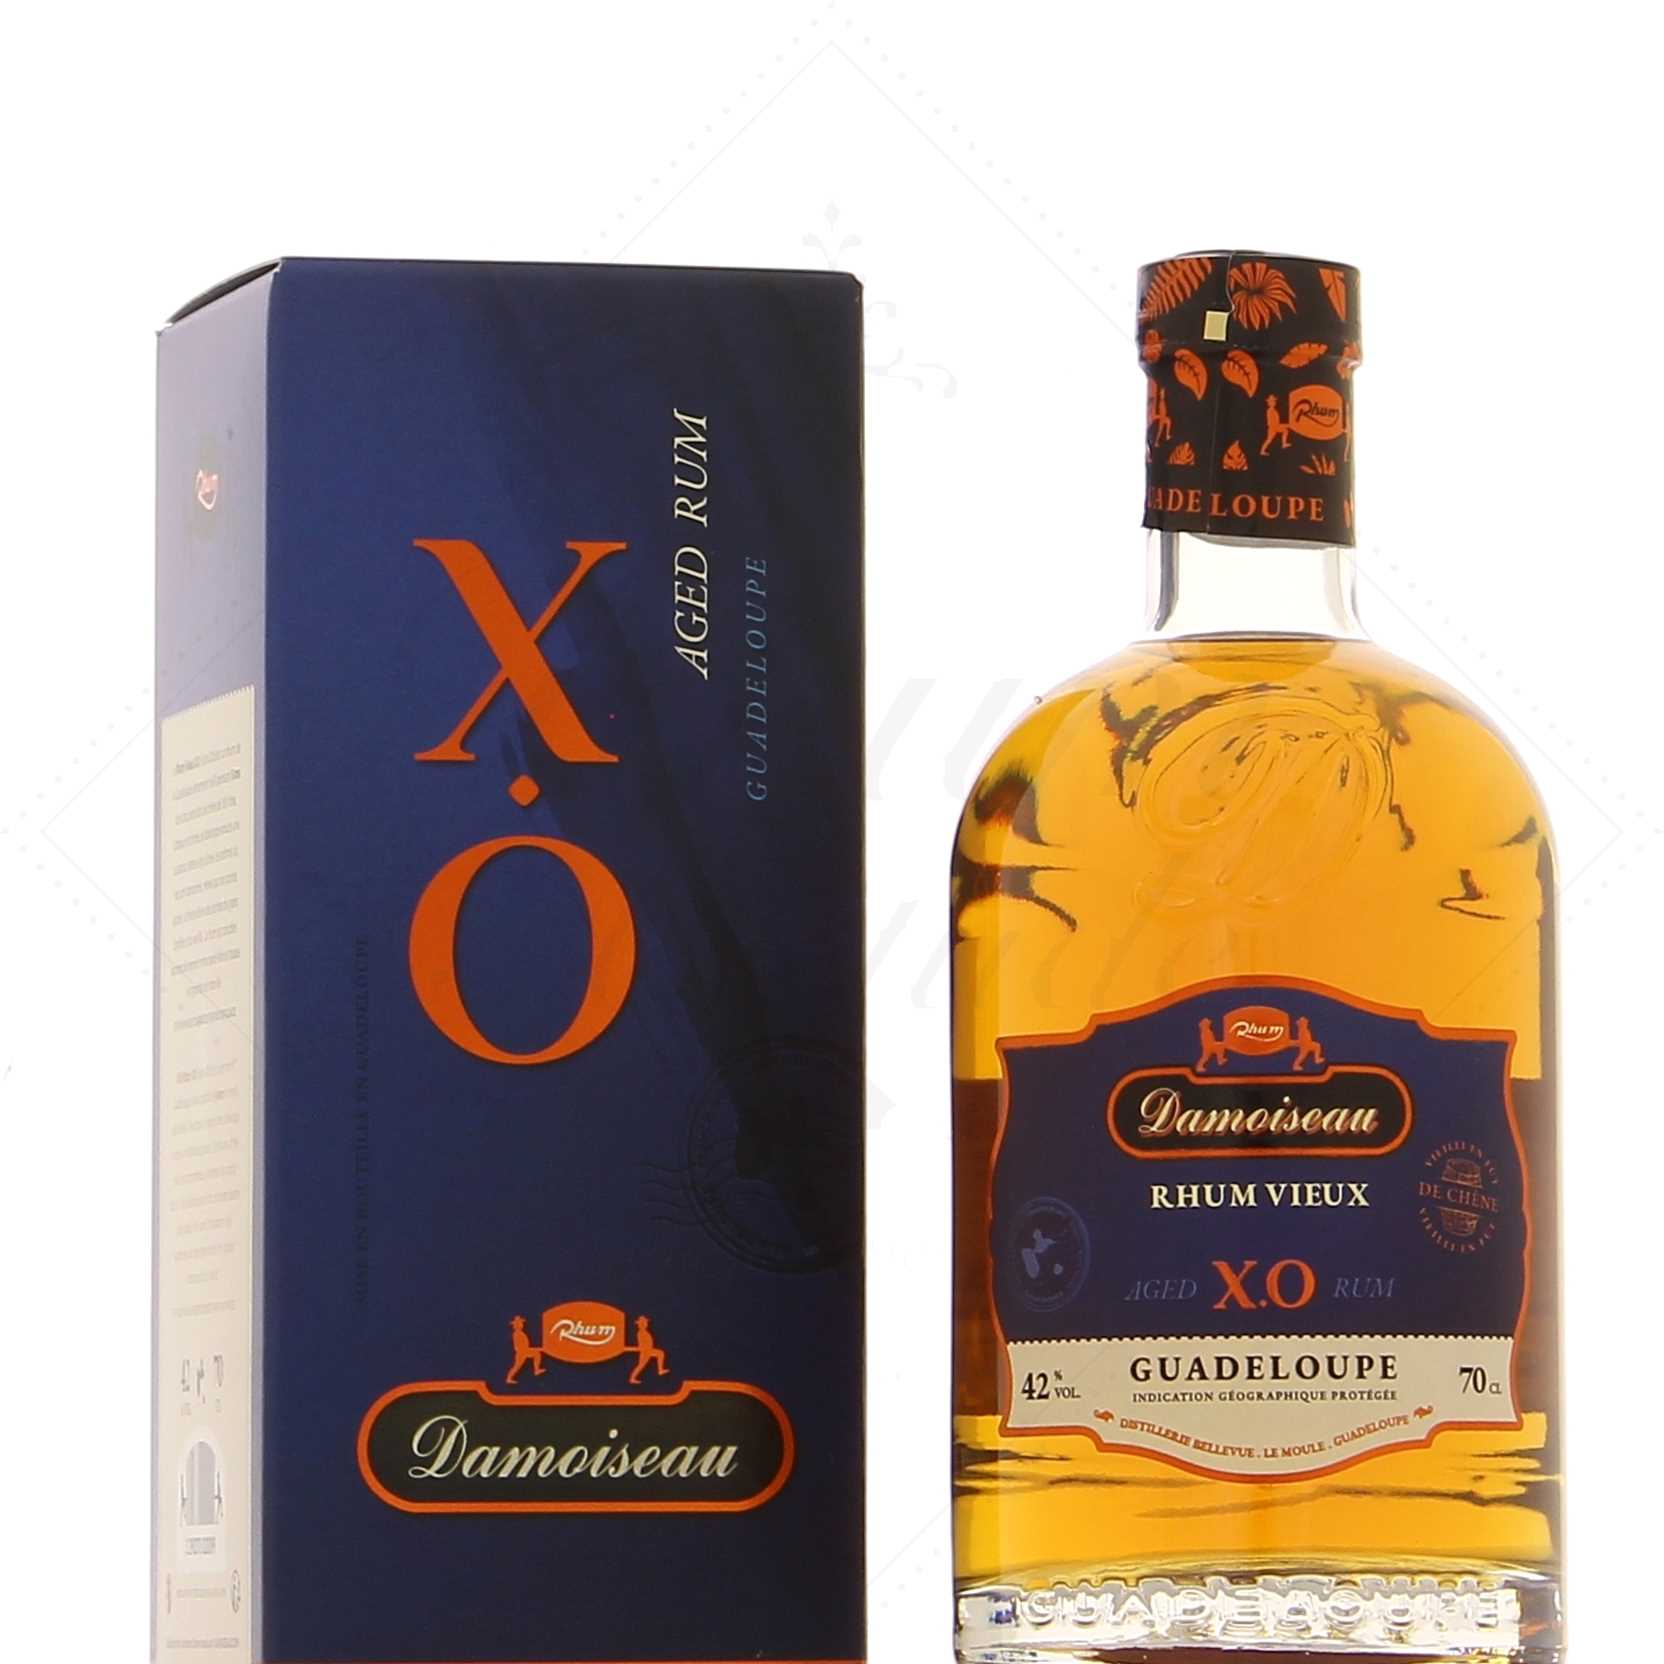 Damoiseau XO Rhum Vieux Agricole Guadeloupe 42% vol. Rum